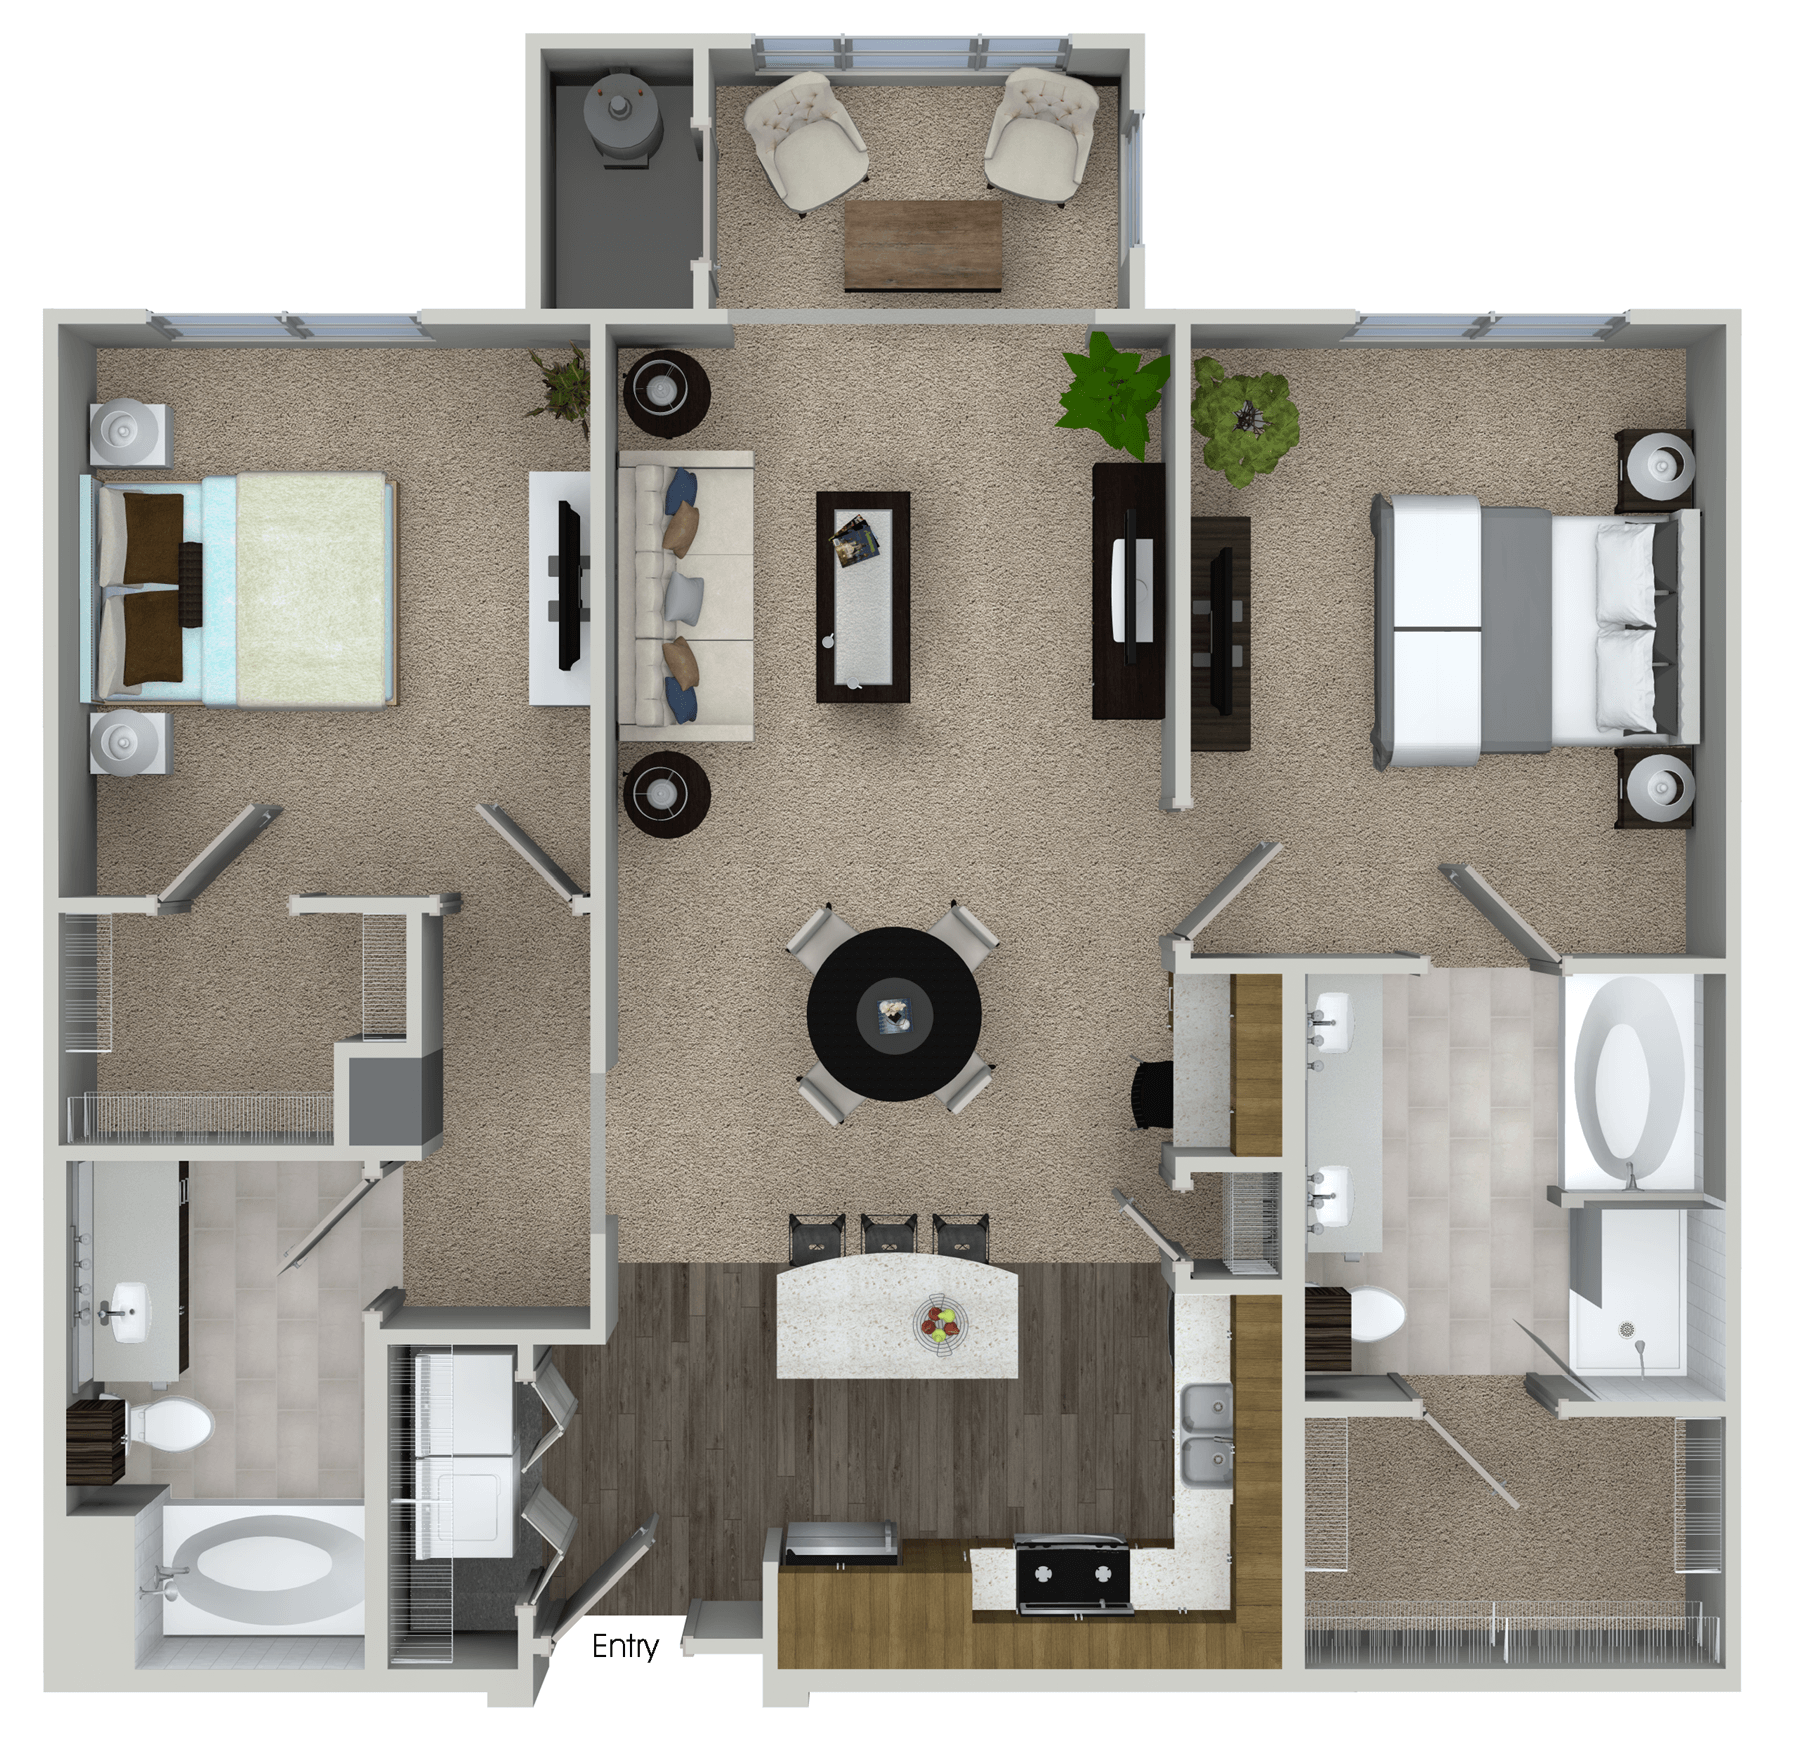 Floorplan for Apartment #1408, 2 bedroom unit at Halstead Marlborough